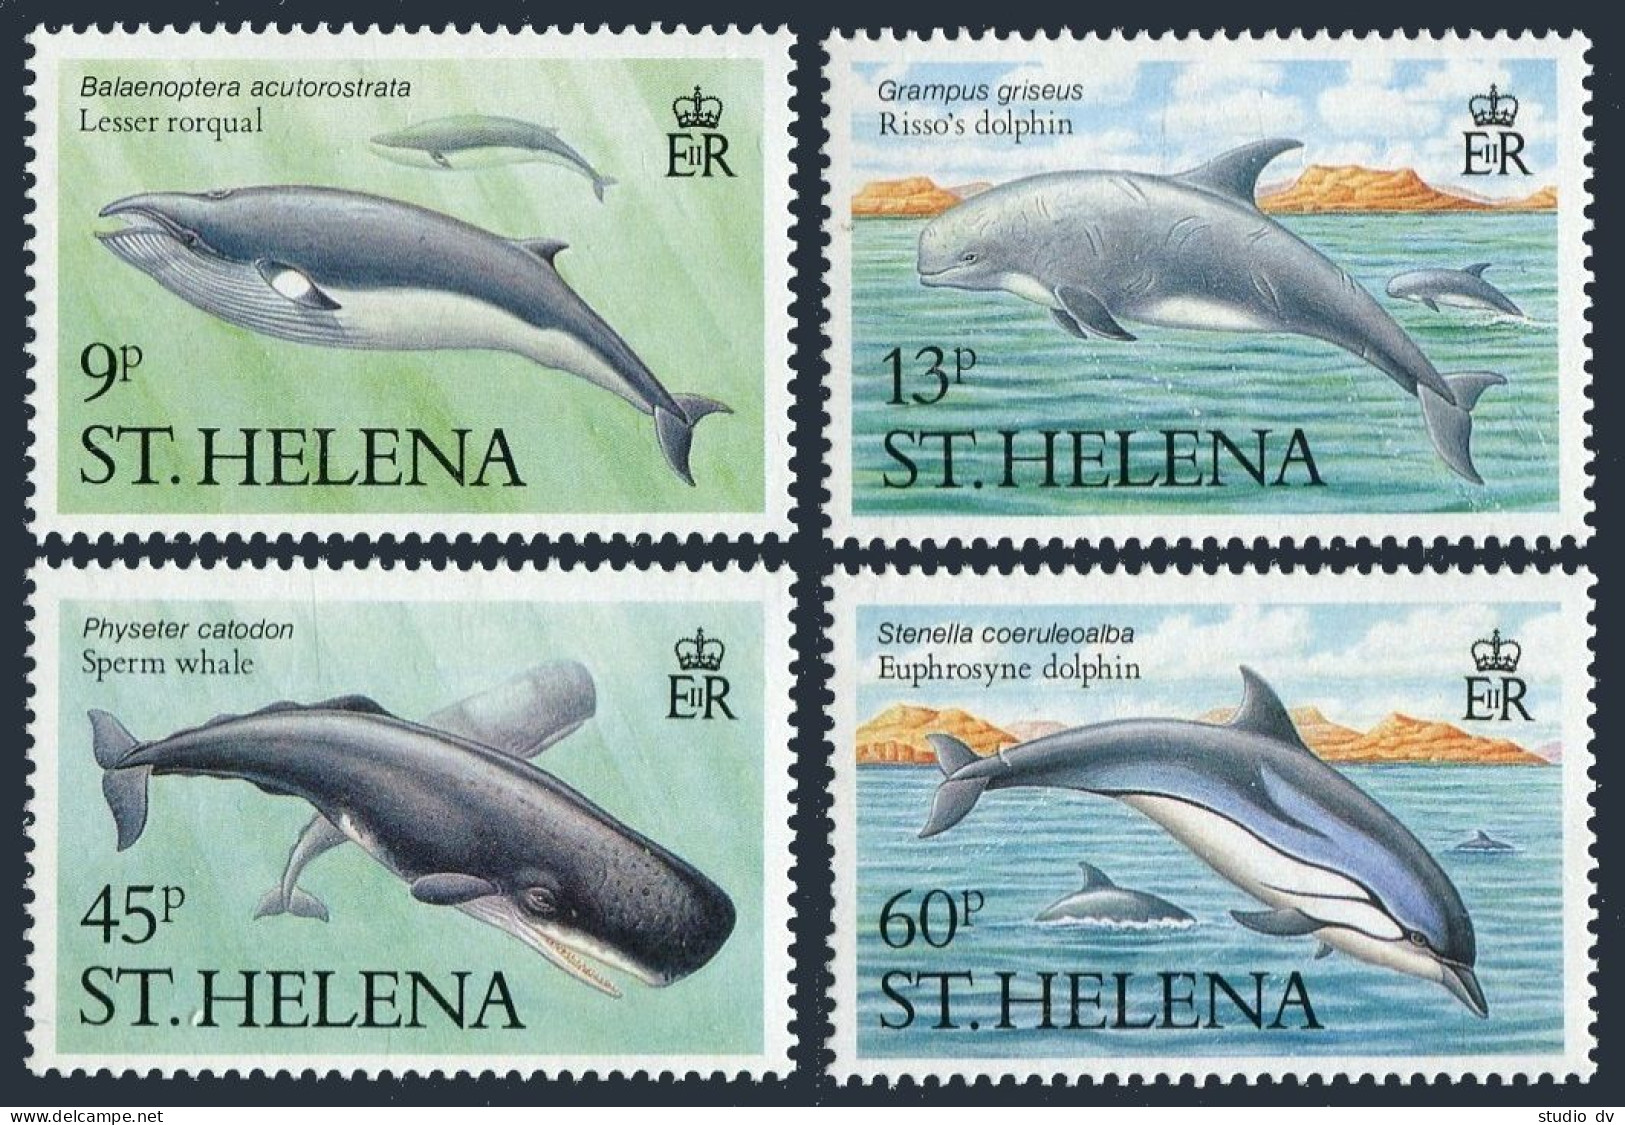 St Helena 483-486, 487, MNH. Michel 473-476, Bl.8. Dolphins, Whales, 1987. - Isola Di Sant'Elena